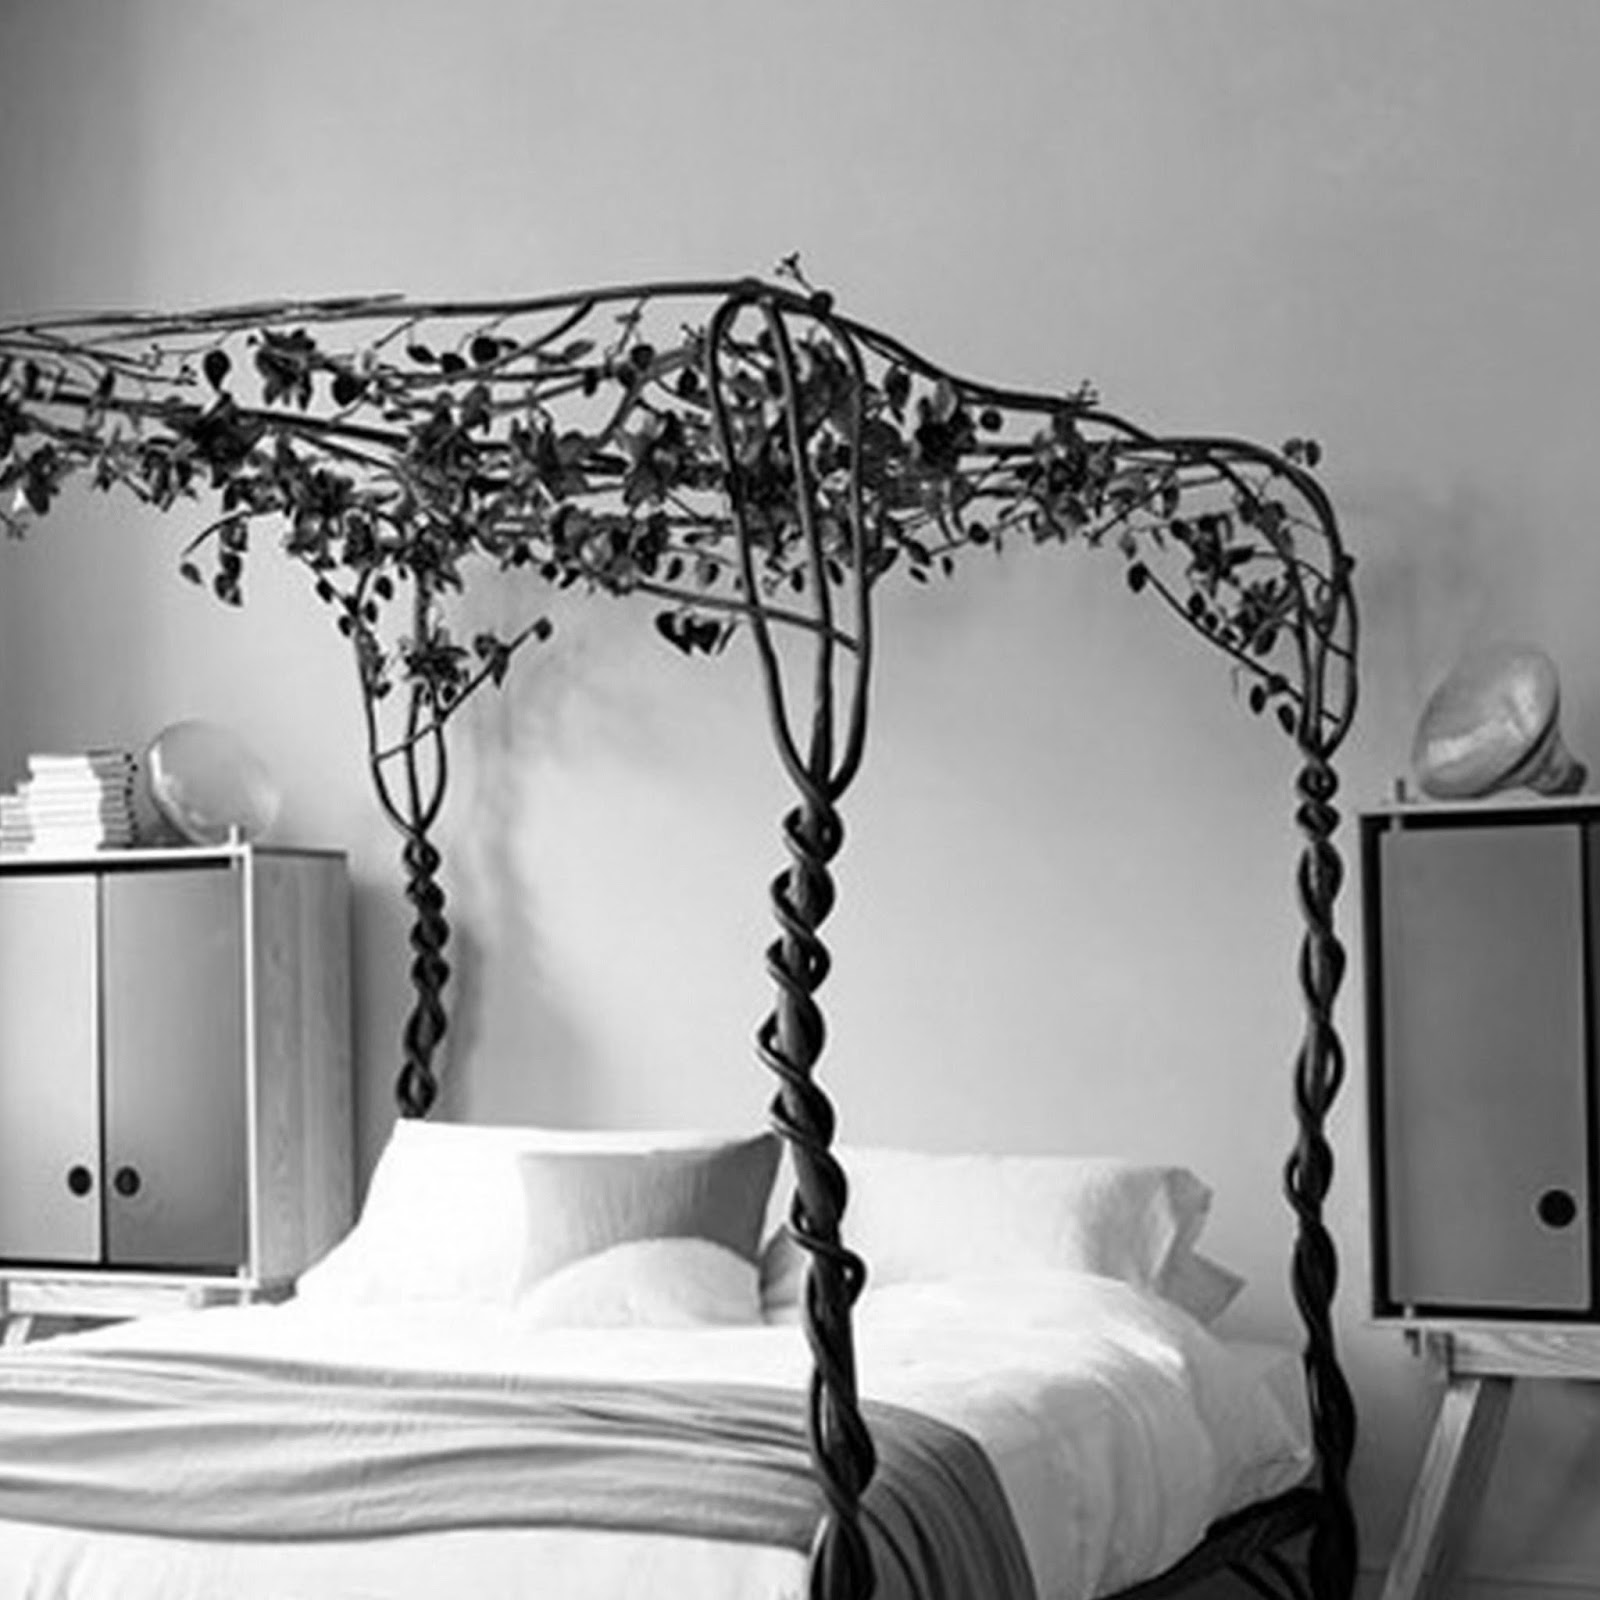 17 Bedroom Design Ideas Black And White-16 Black White Bedroom Decorating Ideas Bedroom,Design,Ideas,Black,And,White